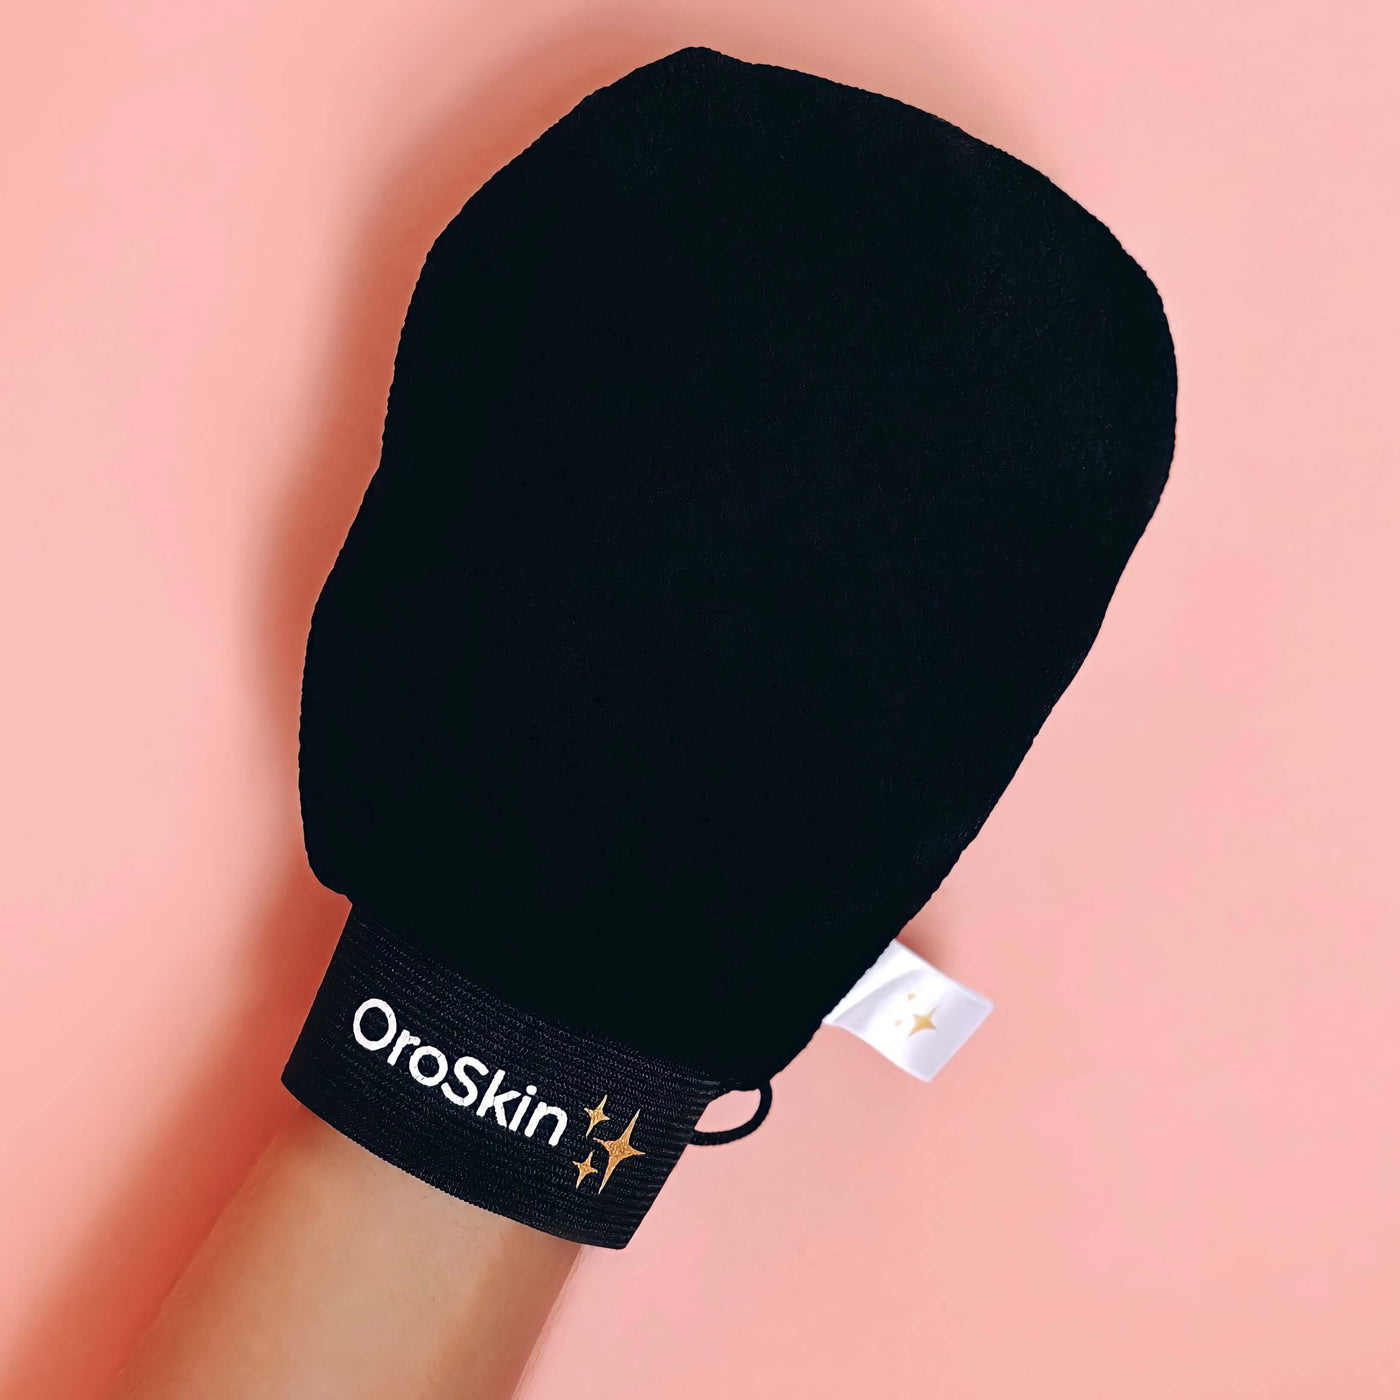 OroSkin Exfoliating Glove skin glow